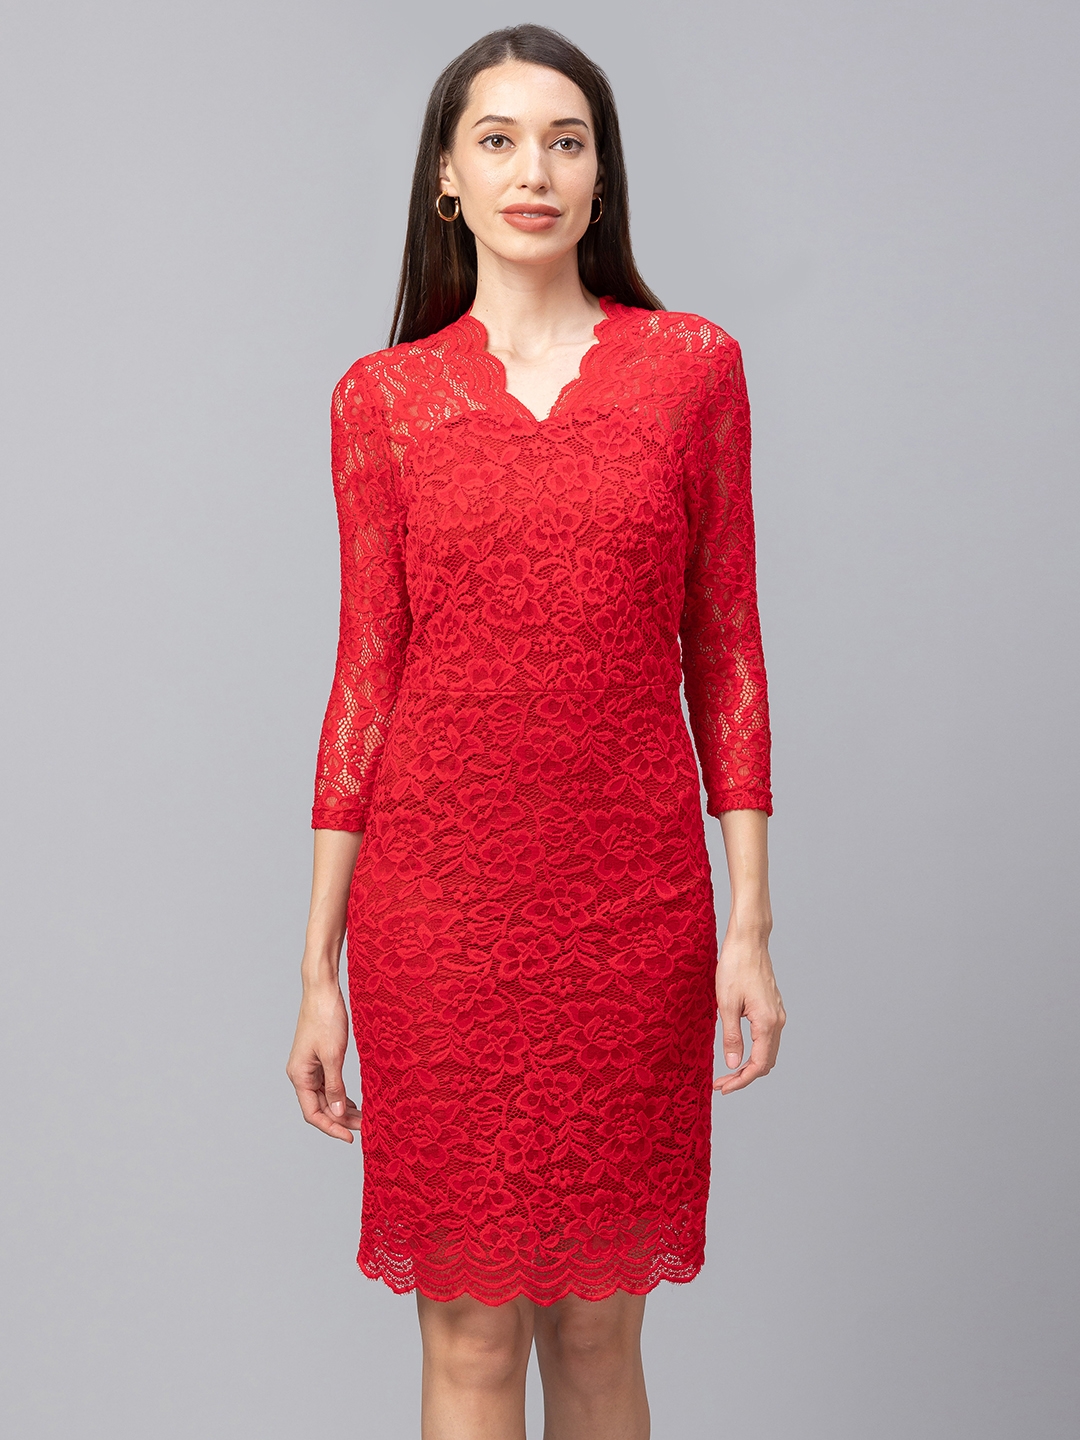 globus | Globus Red Self Design Sheath Dress